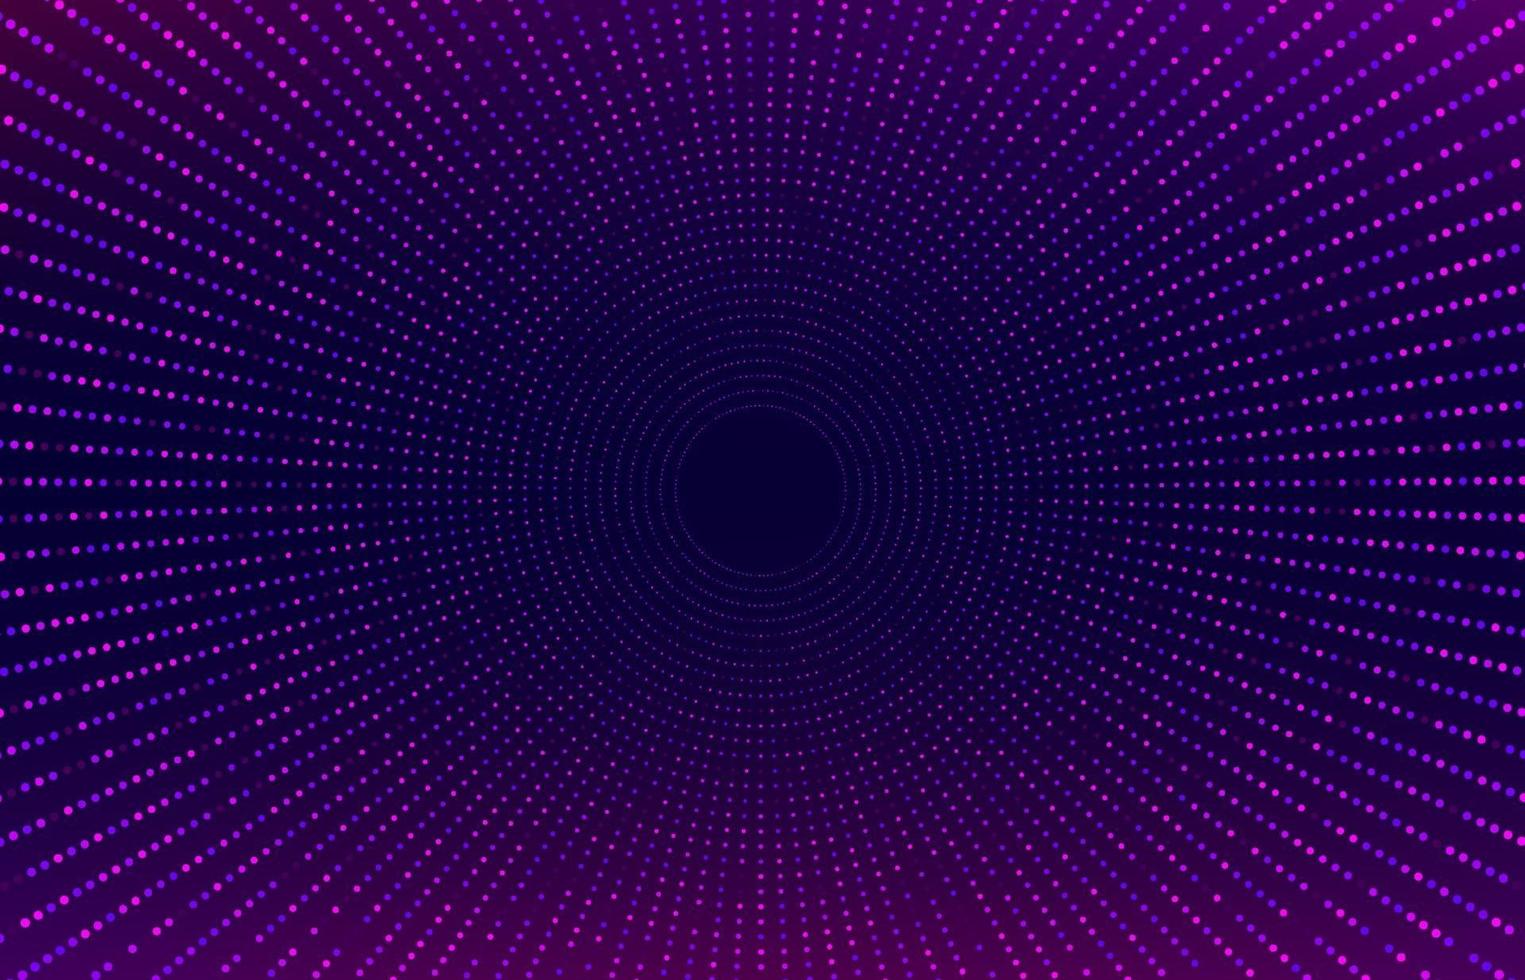 Efecto brillante de semitono brillante azul púrpura abstracto con patrón radial de puntos y luces brillantes sobre fondo oscuro. concepto de tecnología futurista moderna. vector